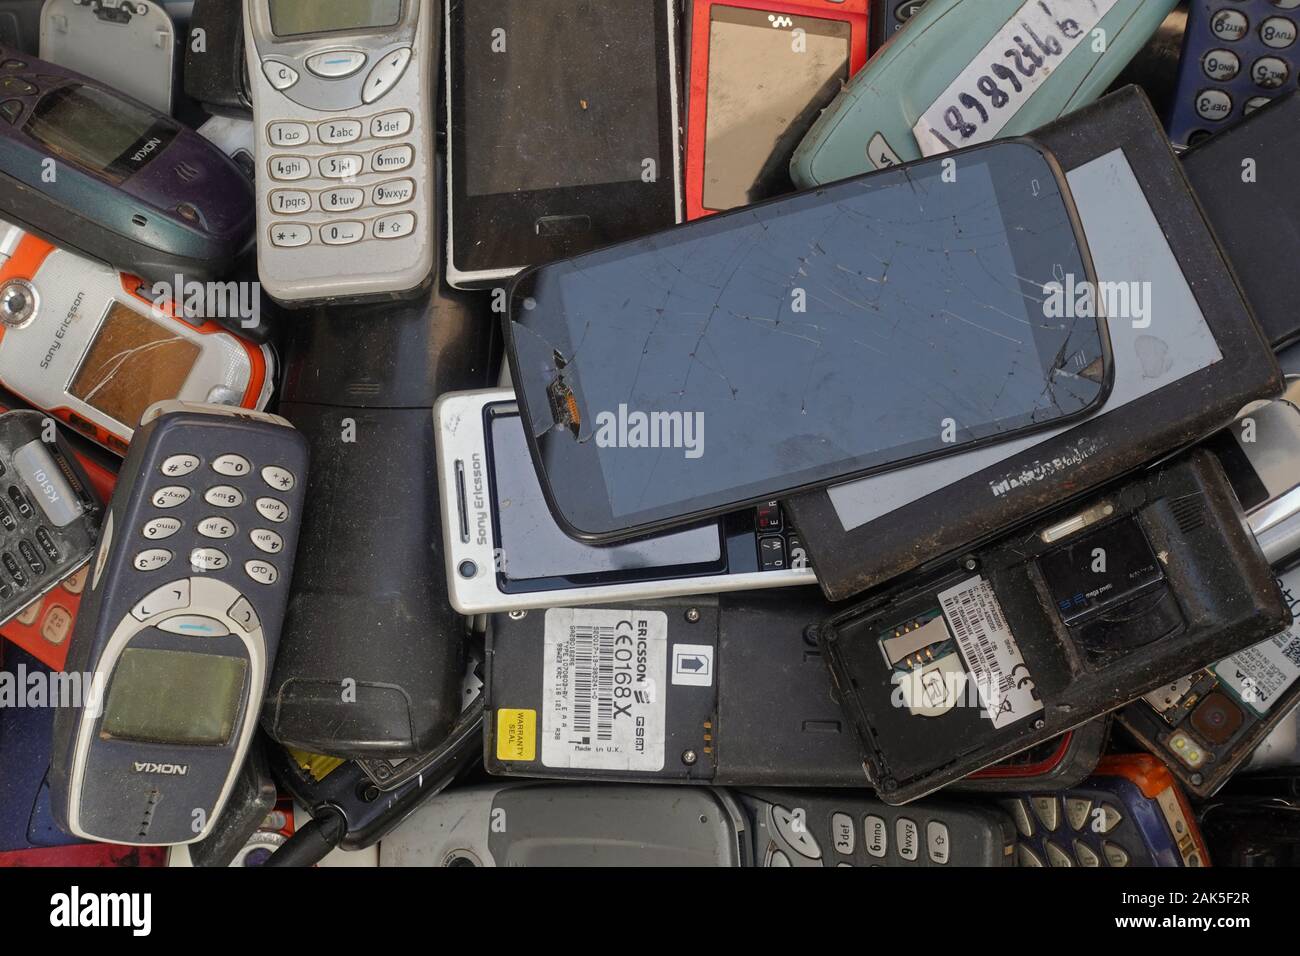 Athens, Greece - October 18, 2019: Pile of old cellphones broken smartphones and vintage mobile phones at junk shop. Stock Photo